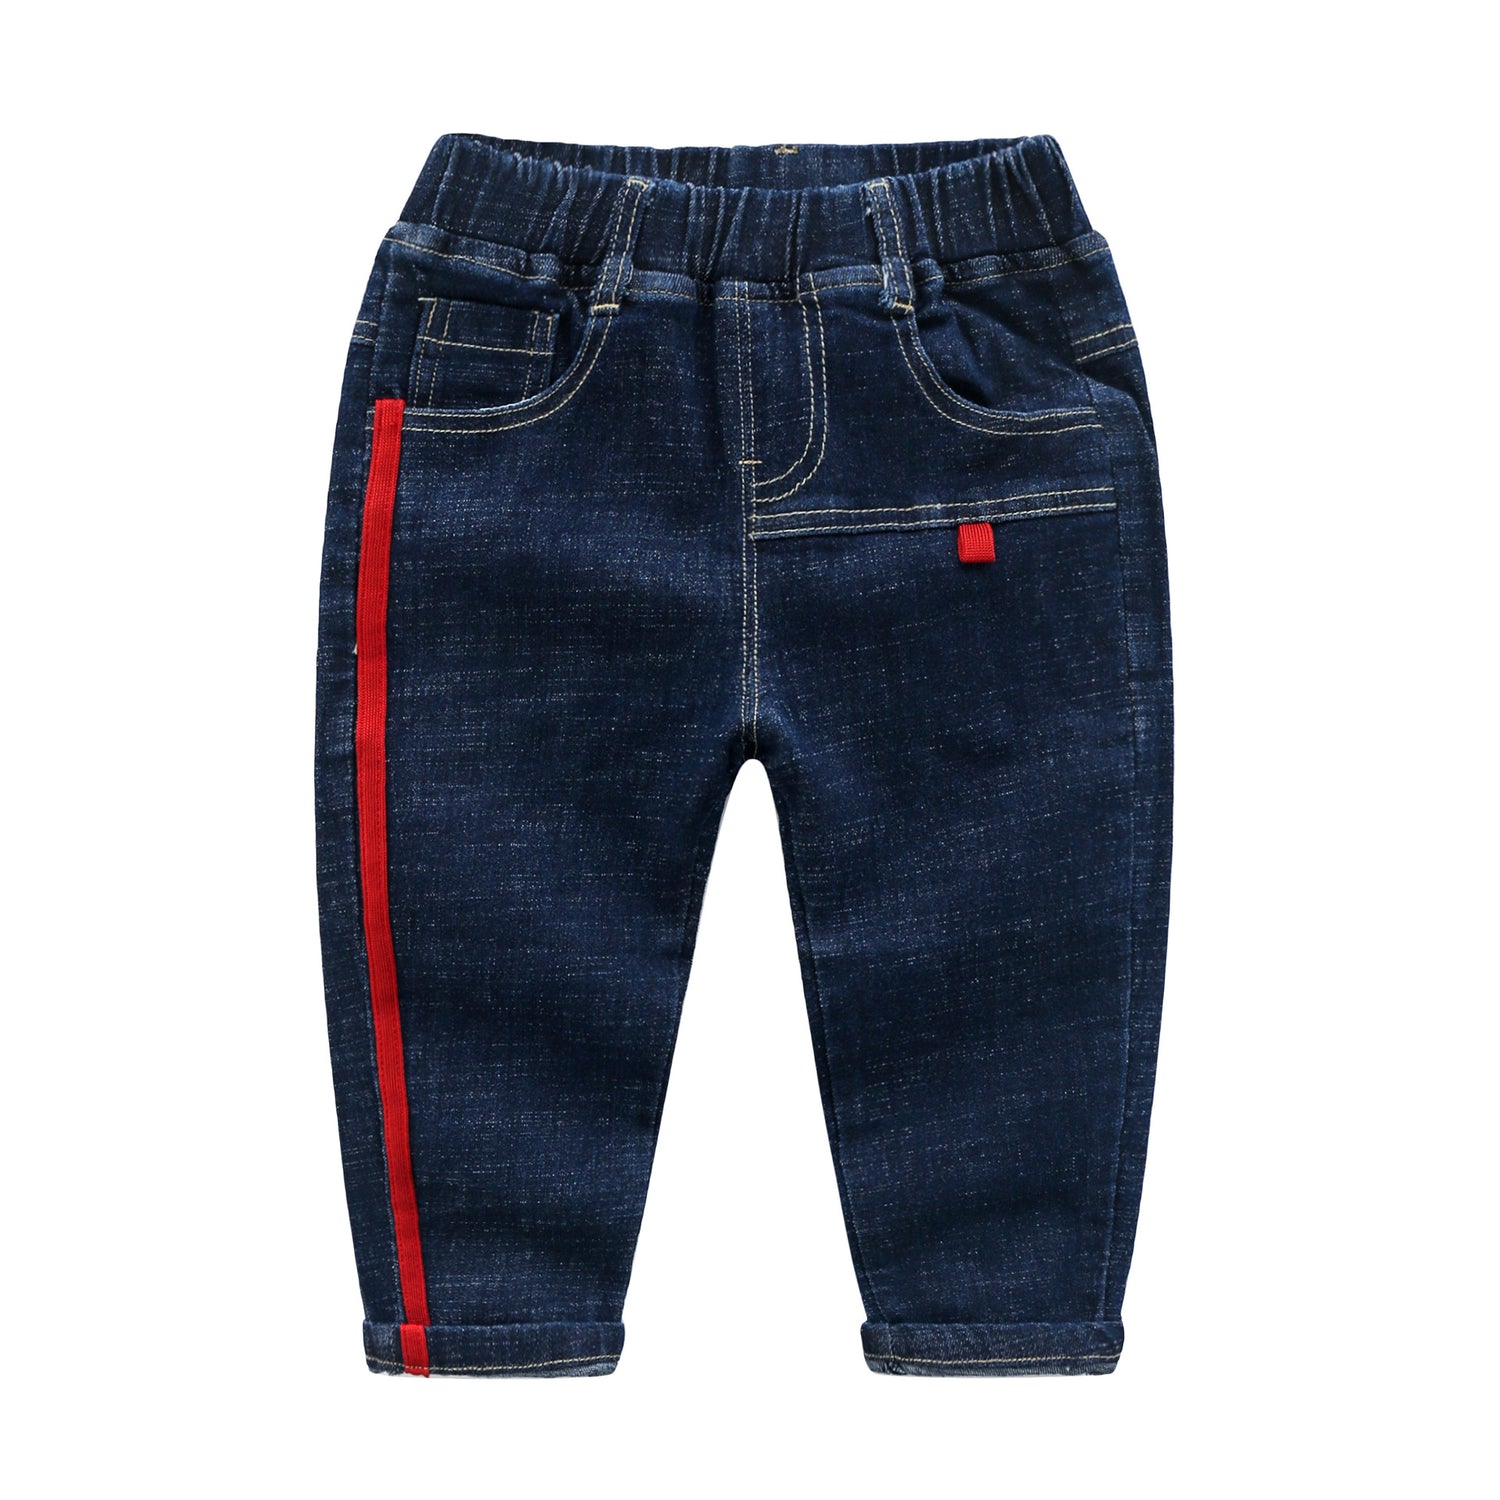 [513595] - Bawahan Celana Panjang Jeans Import Anak Laki-Laki - Motif Strip Side